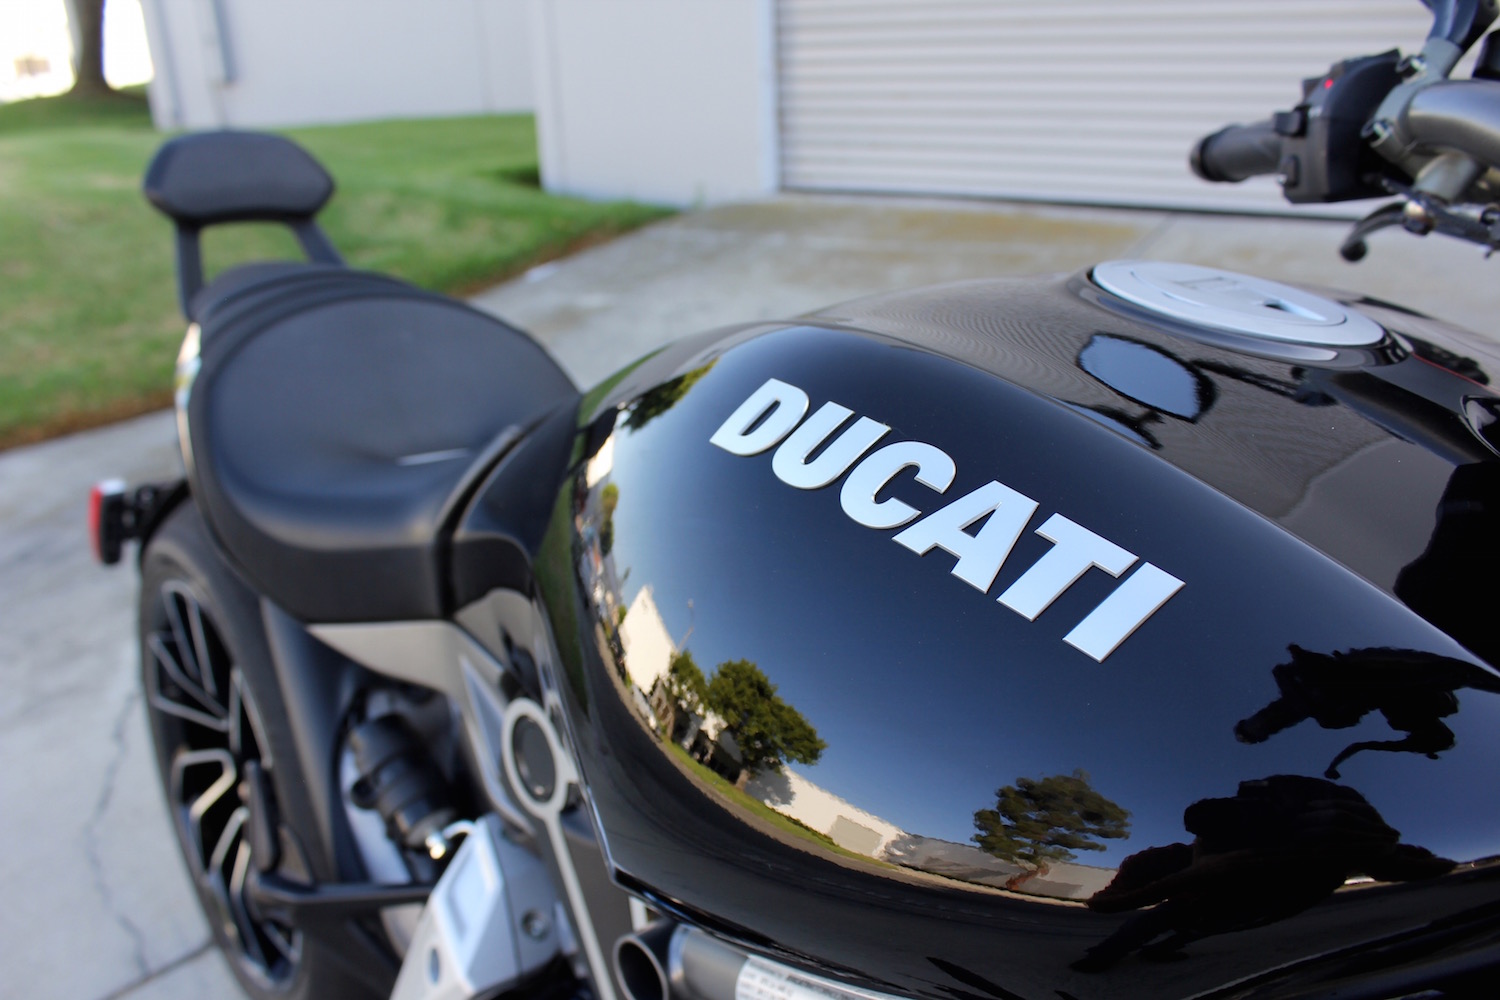 Ducati XDiavel S